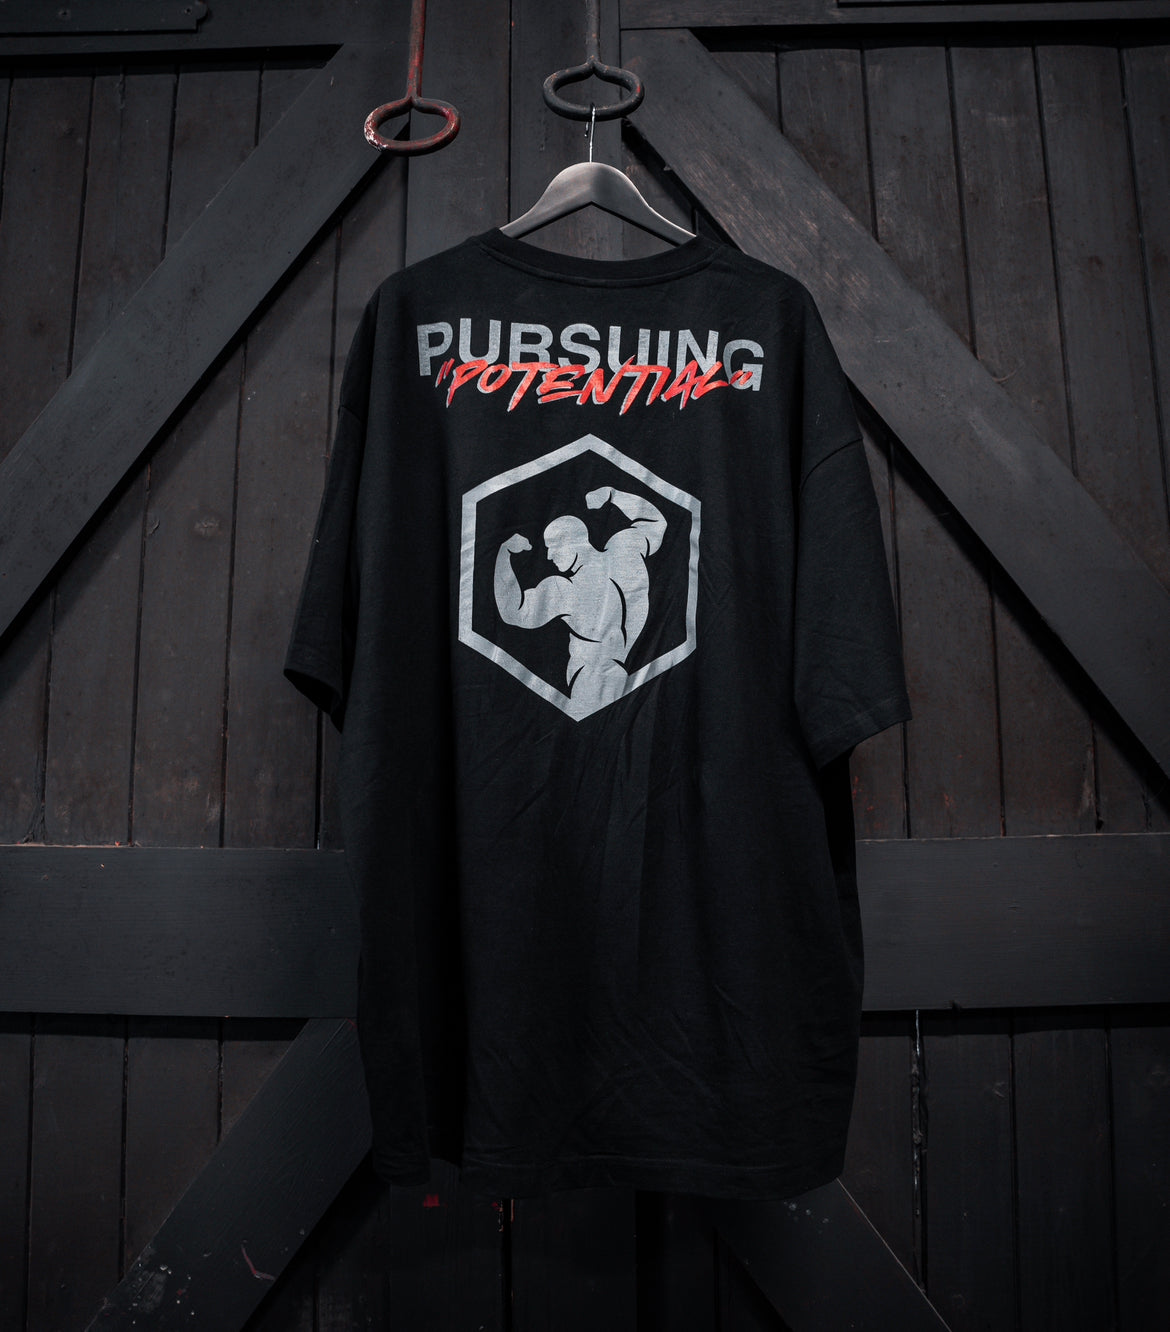 Pursuing "POTENTIAL" T-shirt